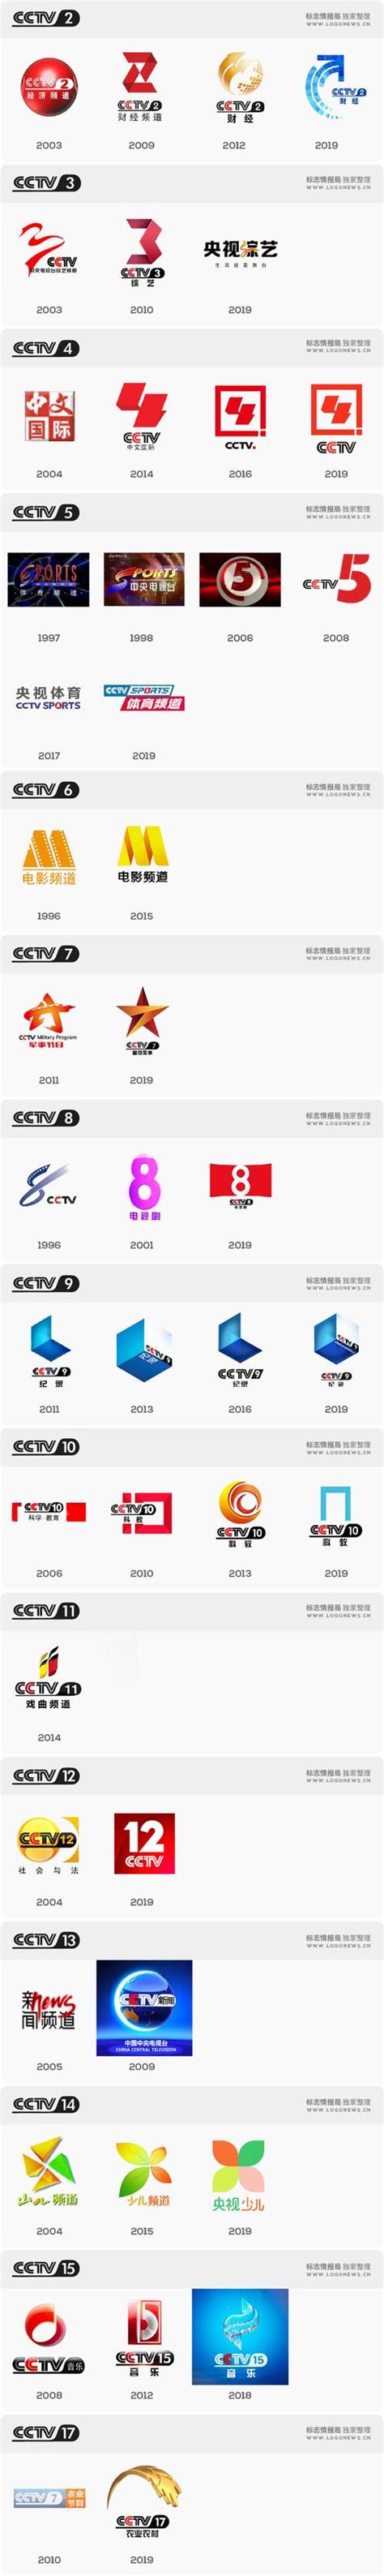 cctv8是什么频道 cctv8频道介绍_知秀网